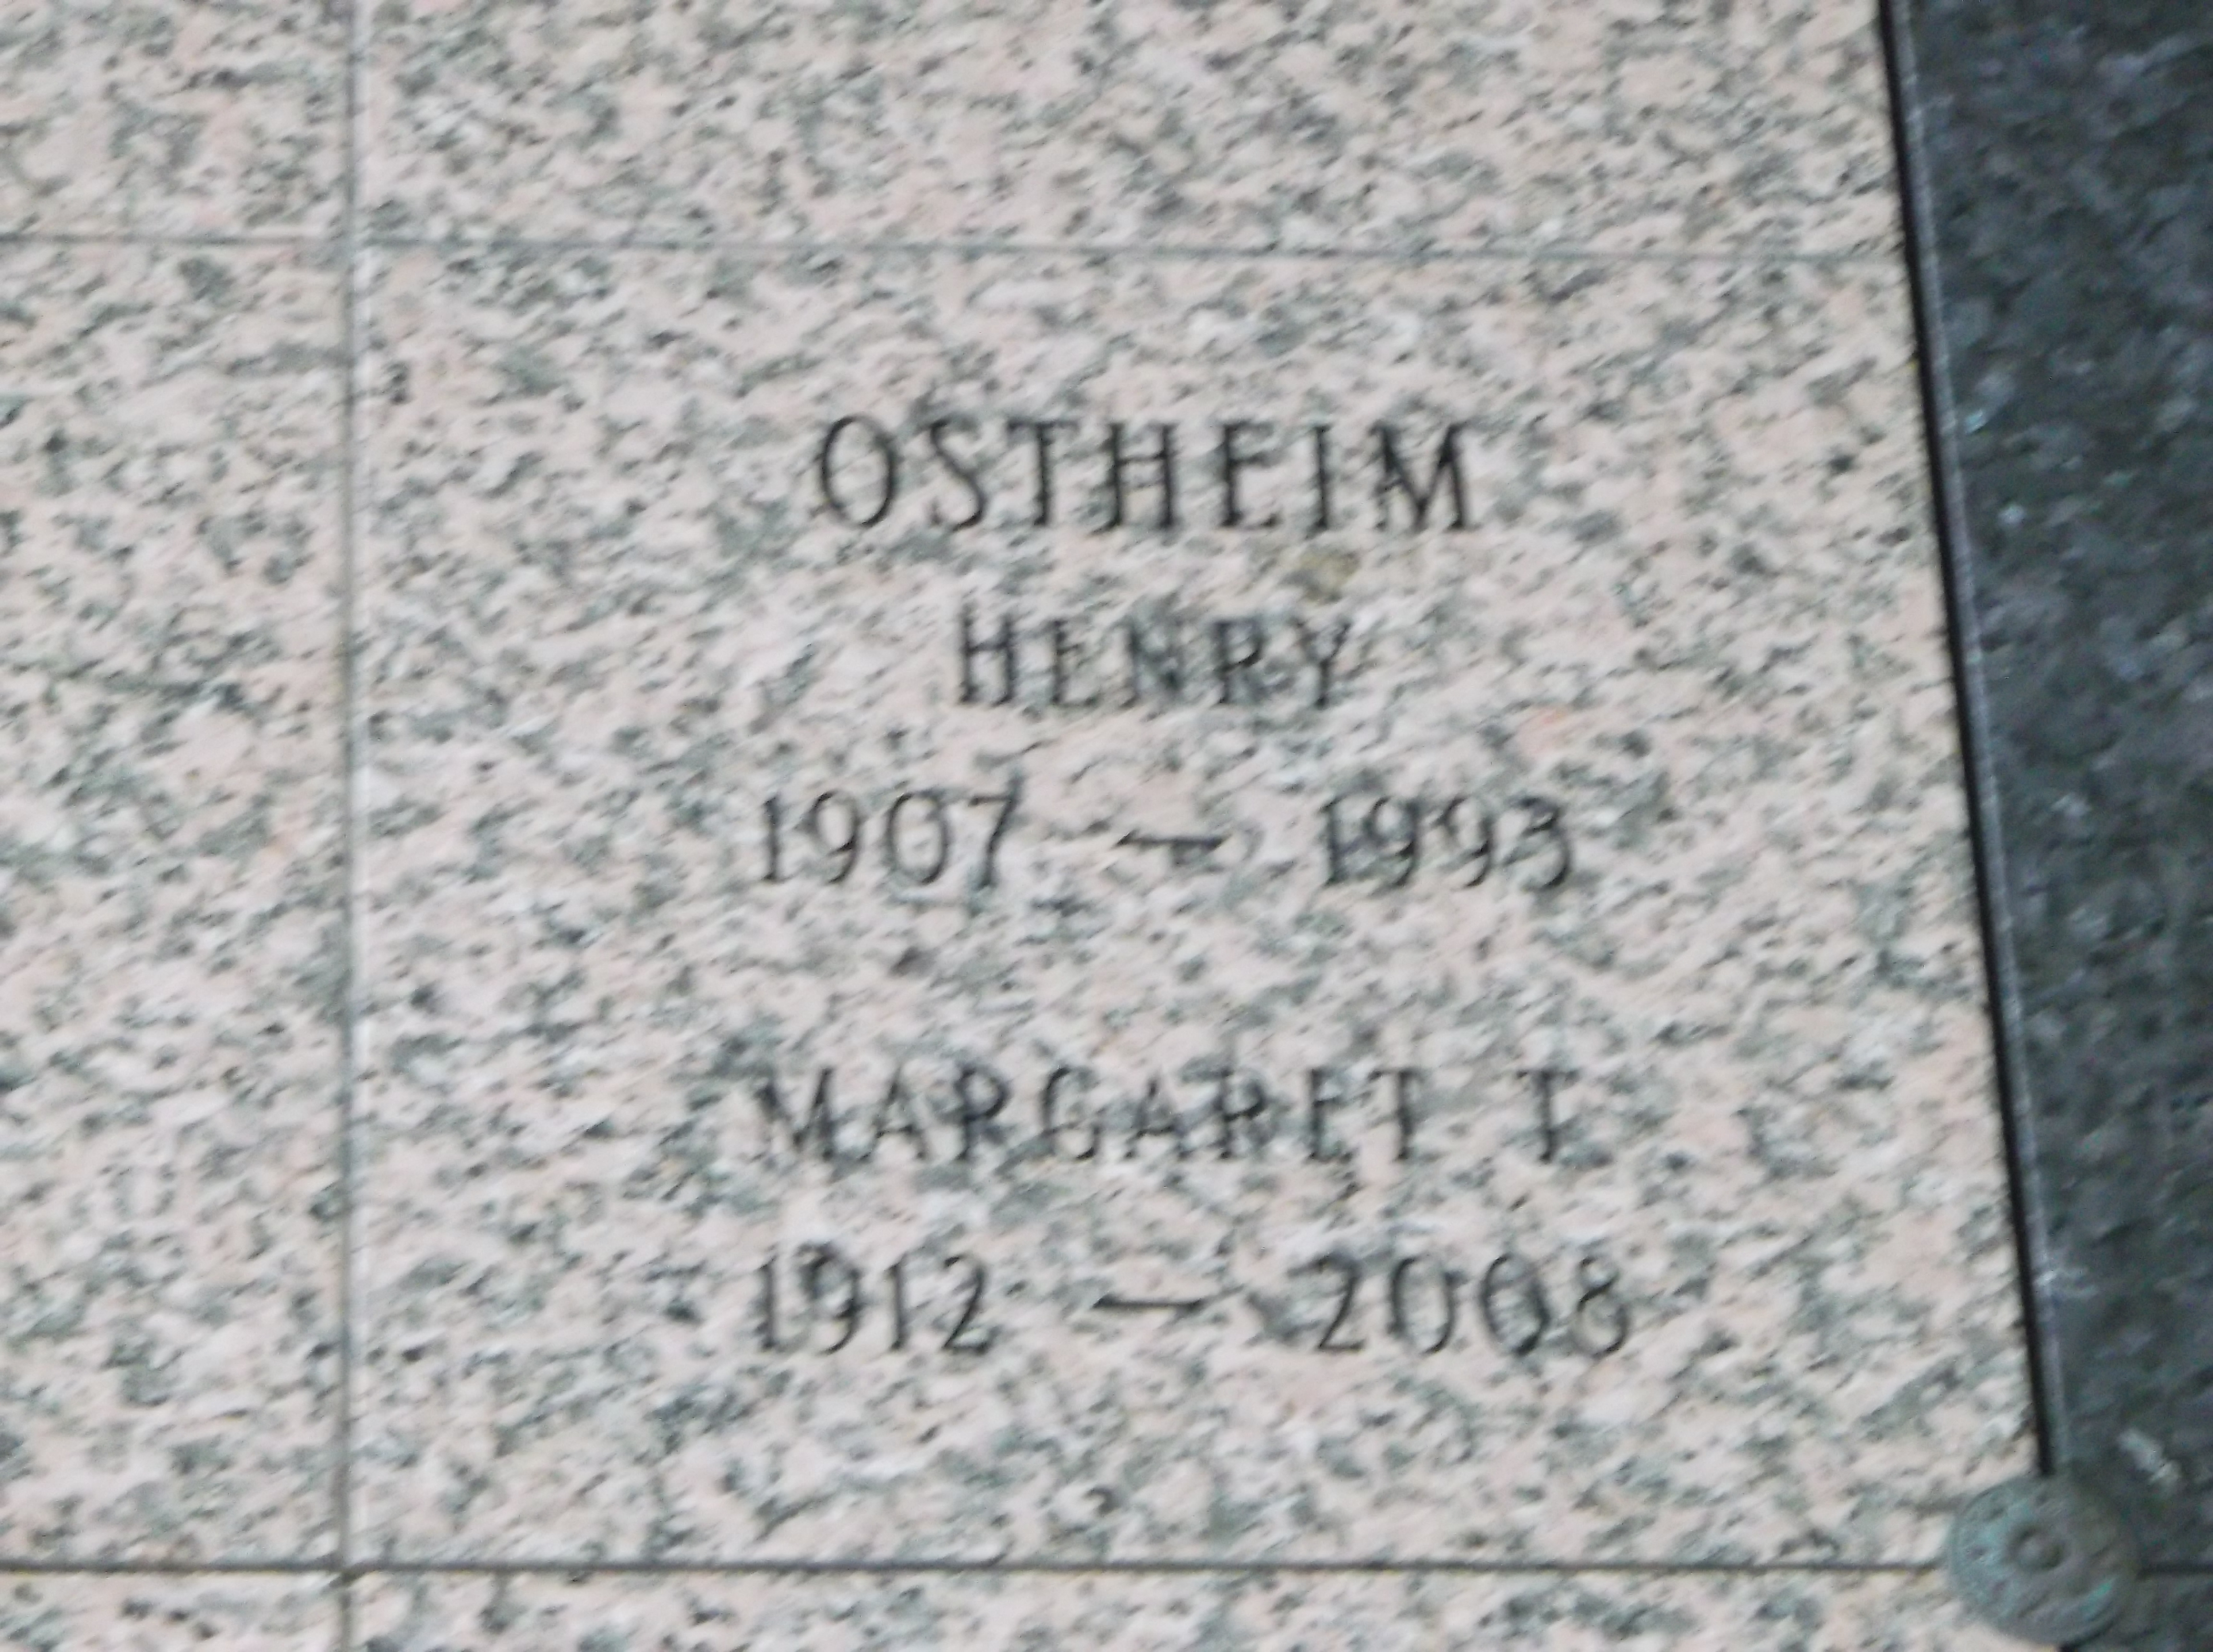 Henry Ostheim